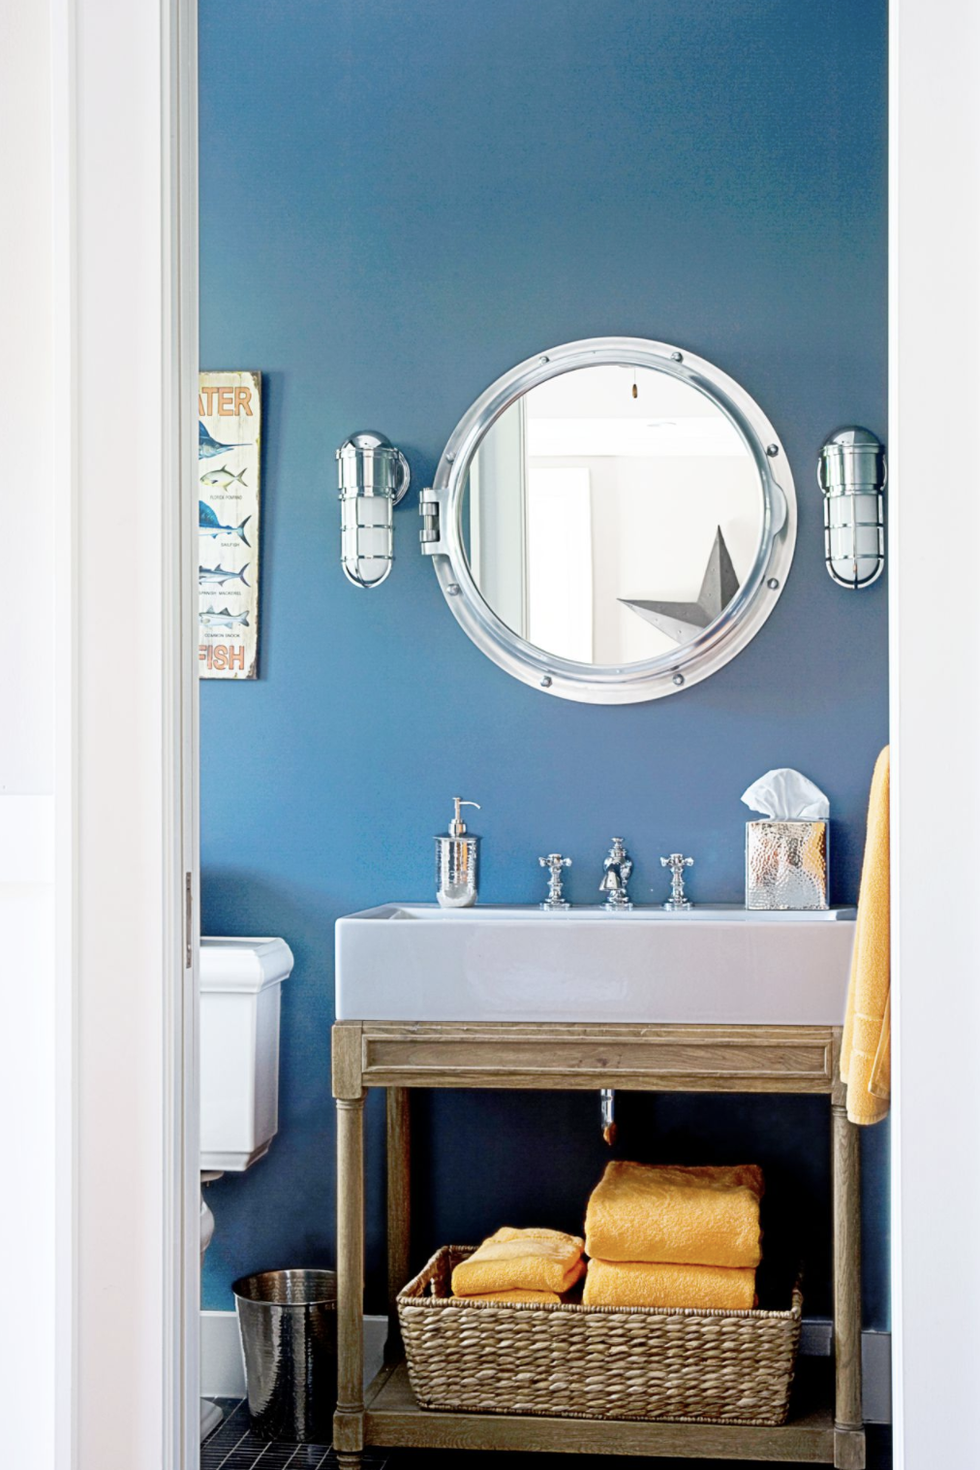 20 Beautiful Blue Bathrooms - Blue Bathroom Design Ideas